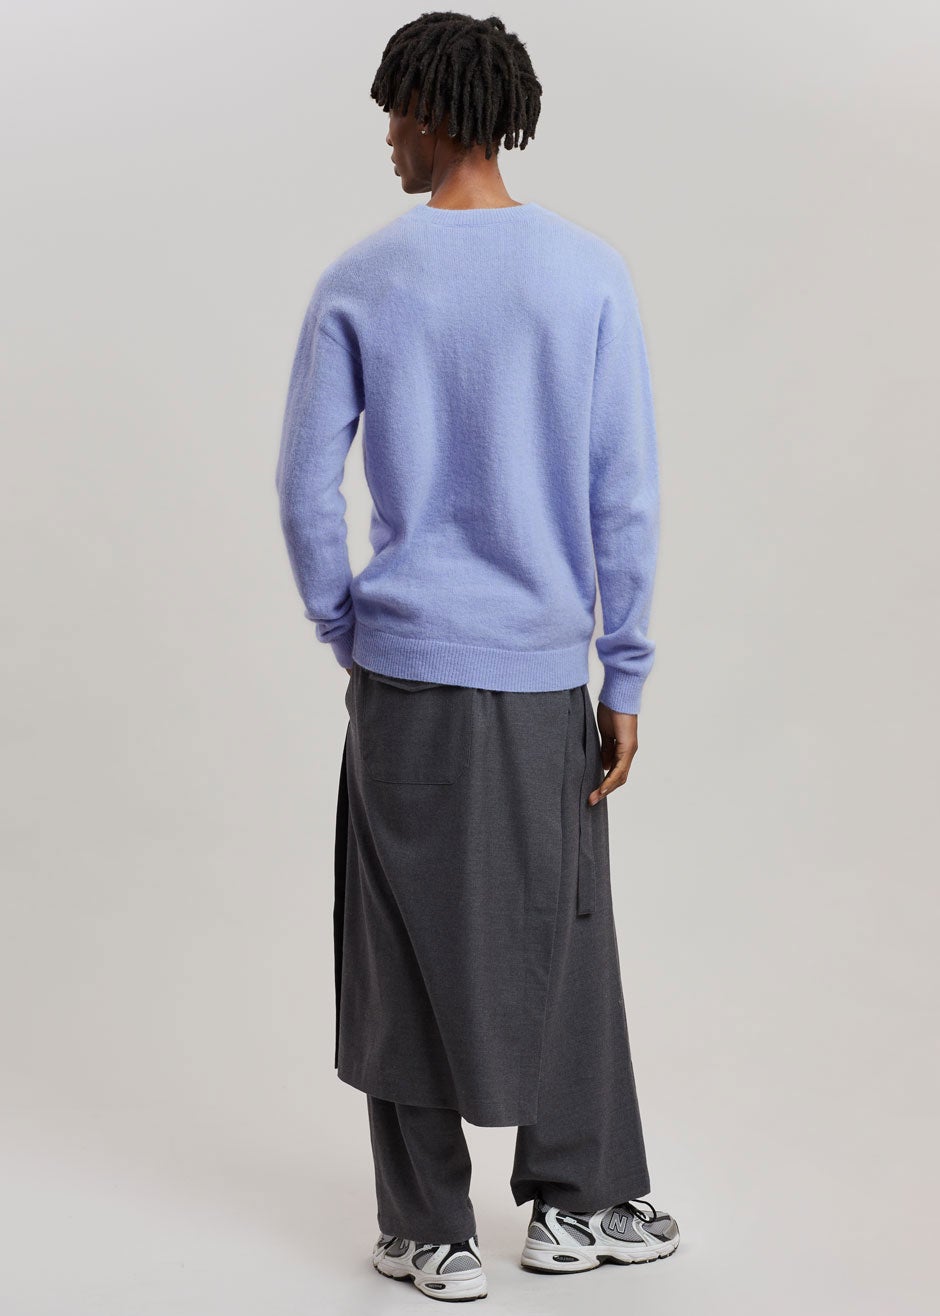 Róhe Allen Sweater - Lavender – The Frankie Shop